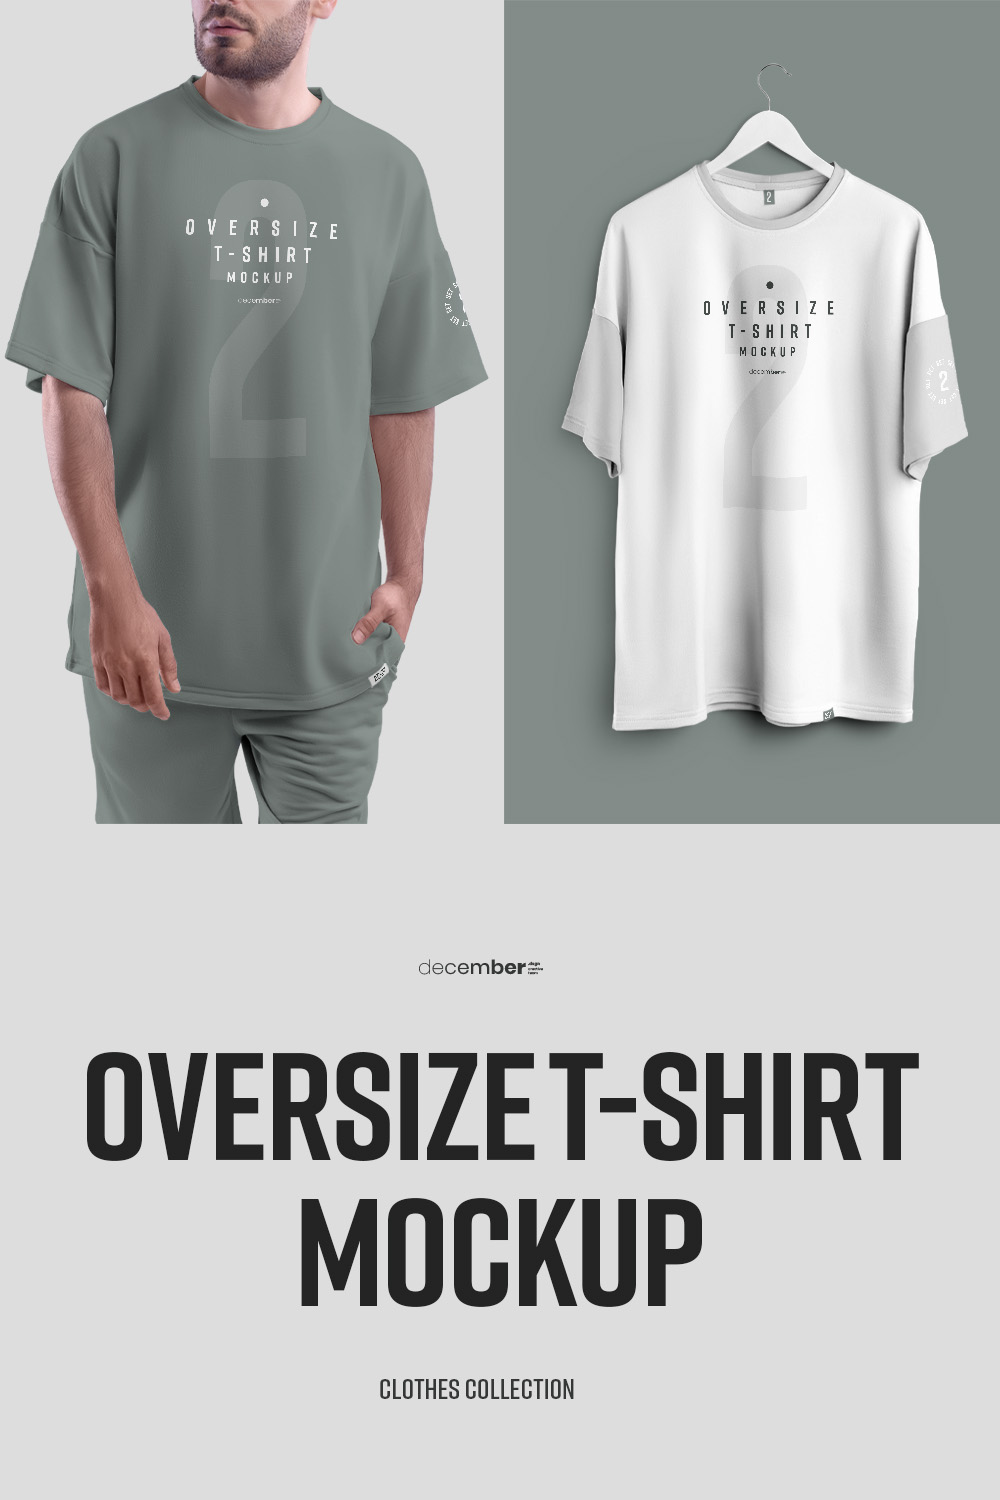 16 Mockups Oversize T-shirt pinterest image.